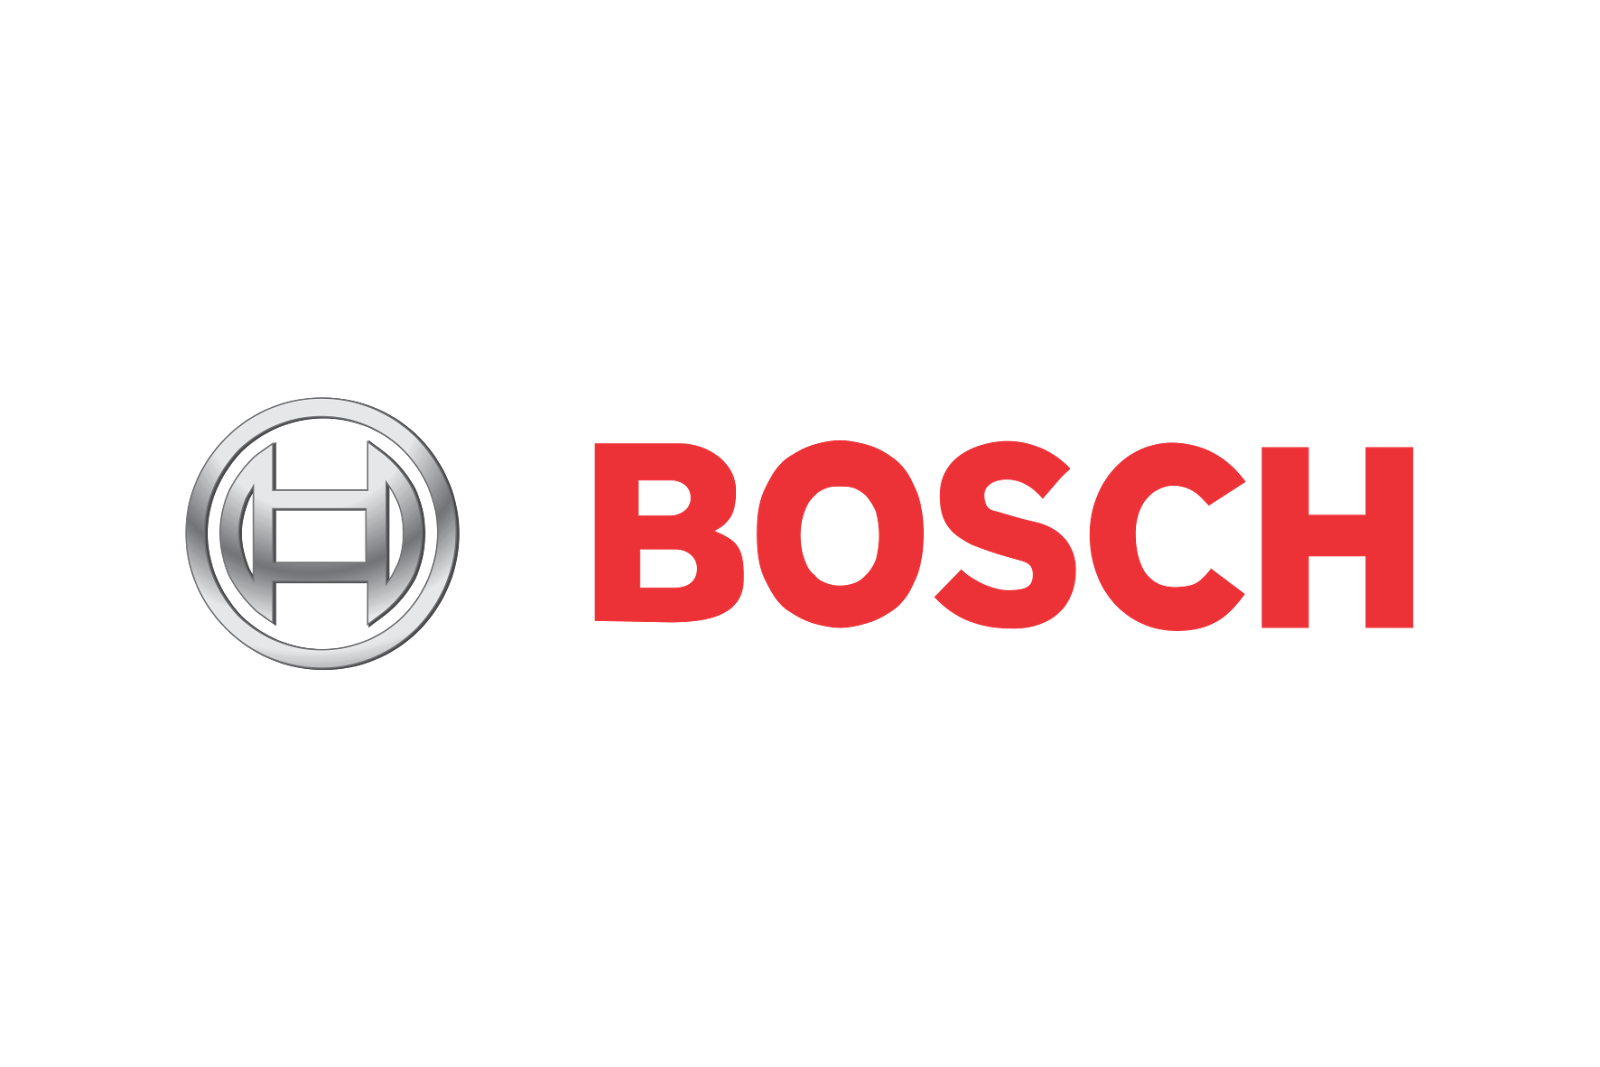 Image result for bosch logo